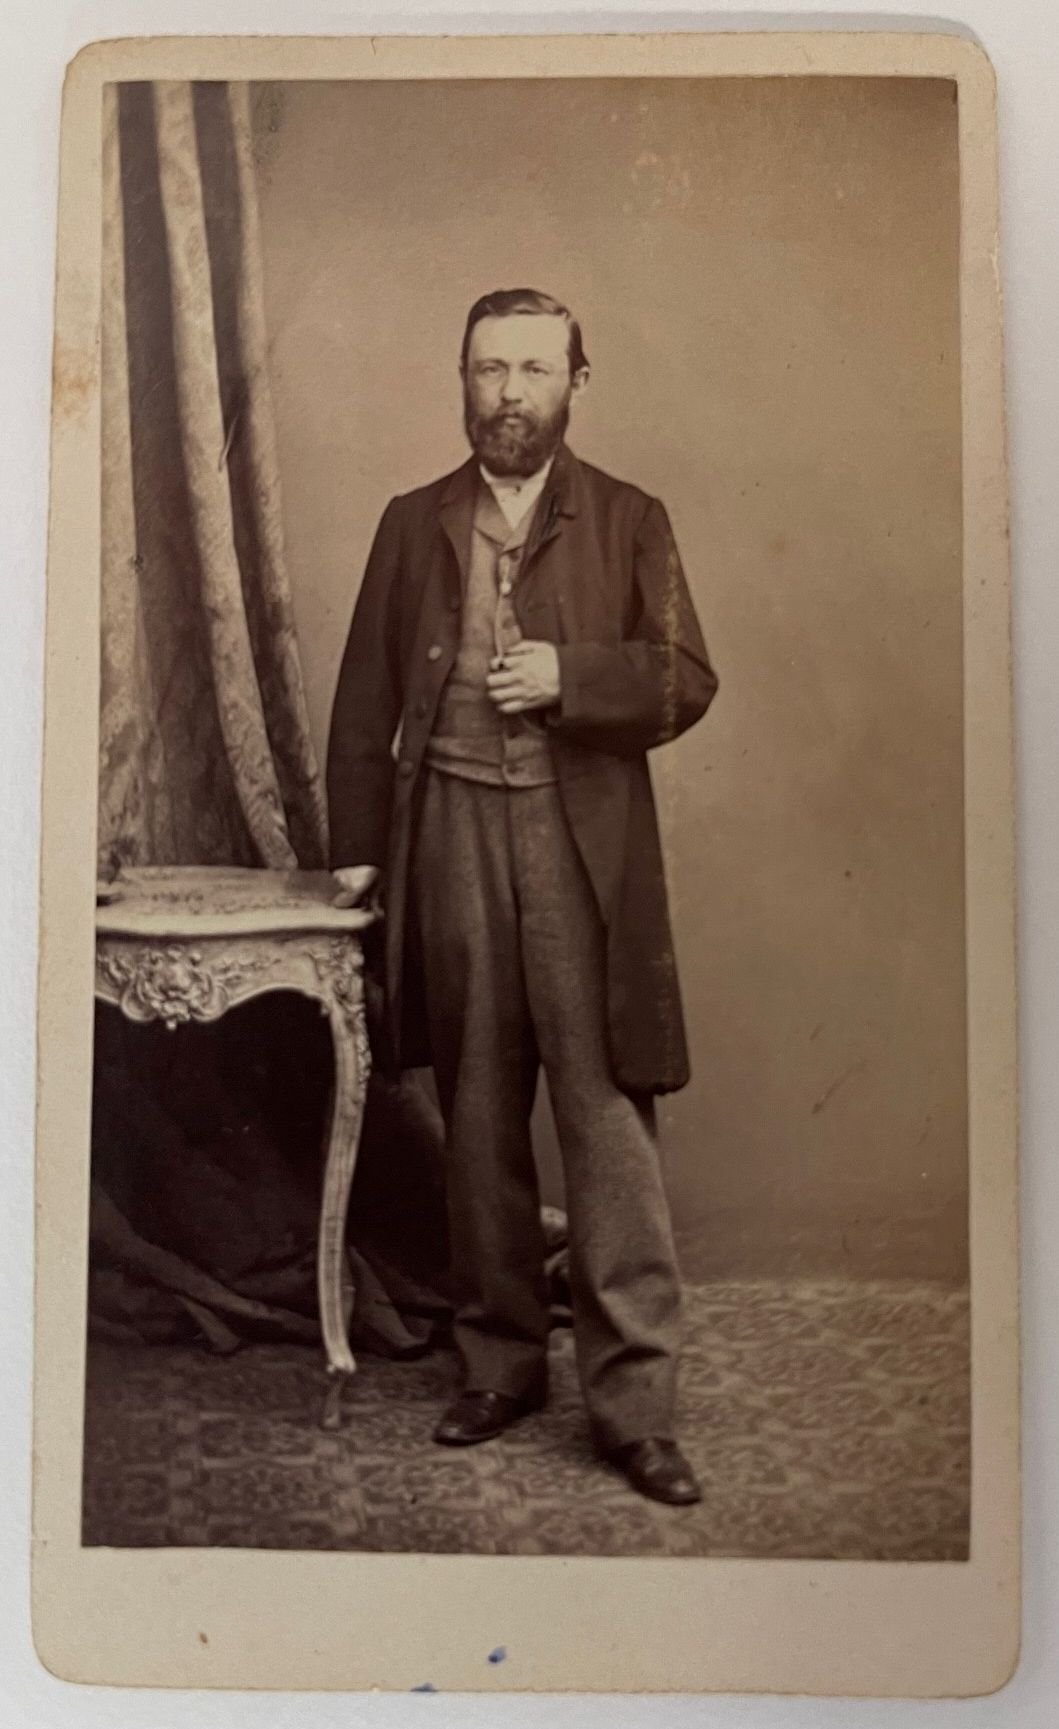 Fotografie, Jacob Seib, Frankfurt, Philipp Reis, ca. 1866. (Taunus-Rhein-Main - Regionalgeschichtliche Sammlung Dr. Stefan Naas CC BY-NC-SA)